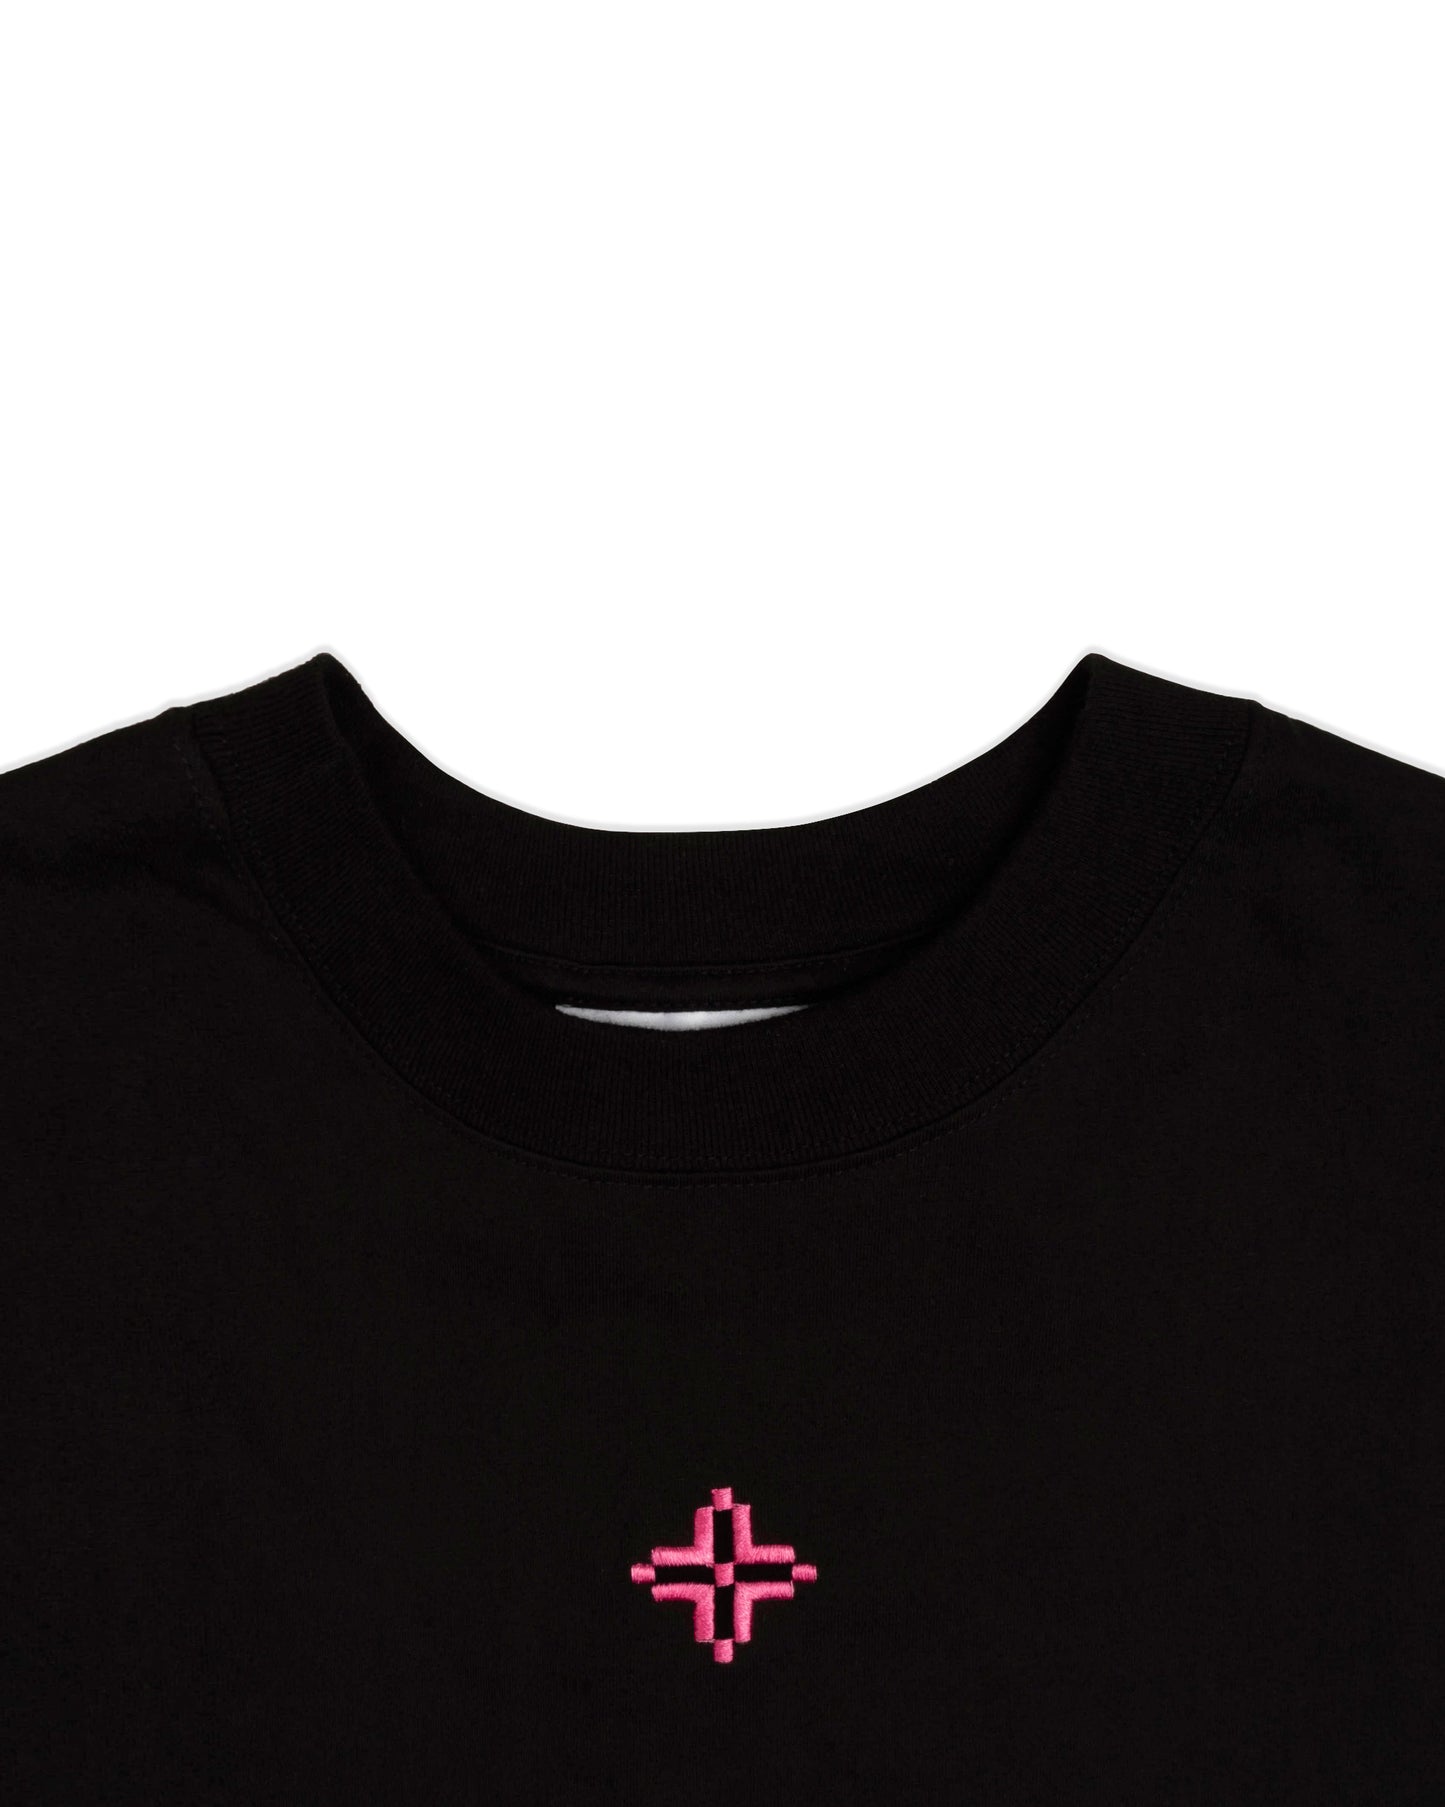 Lvs Xl "Lấp Lánh" Logo Black / Pink